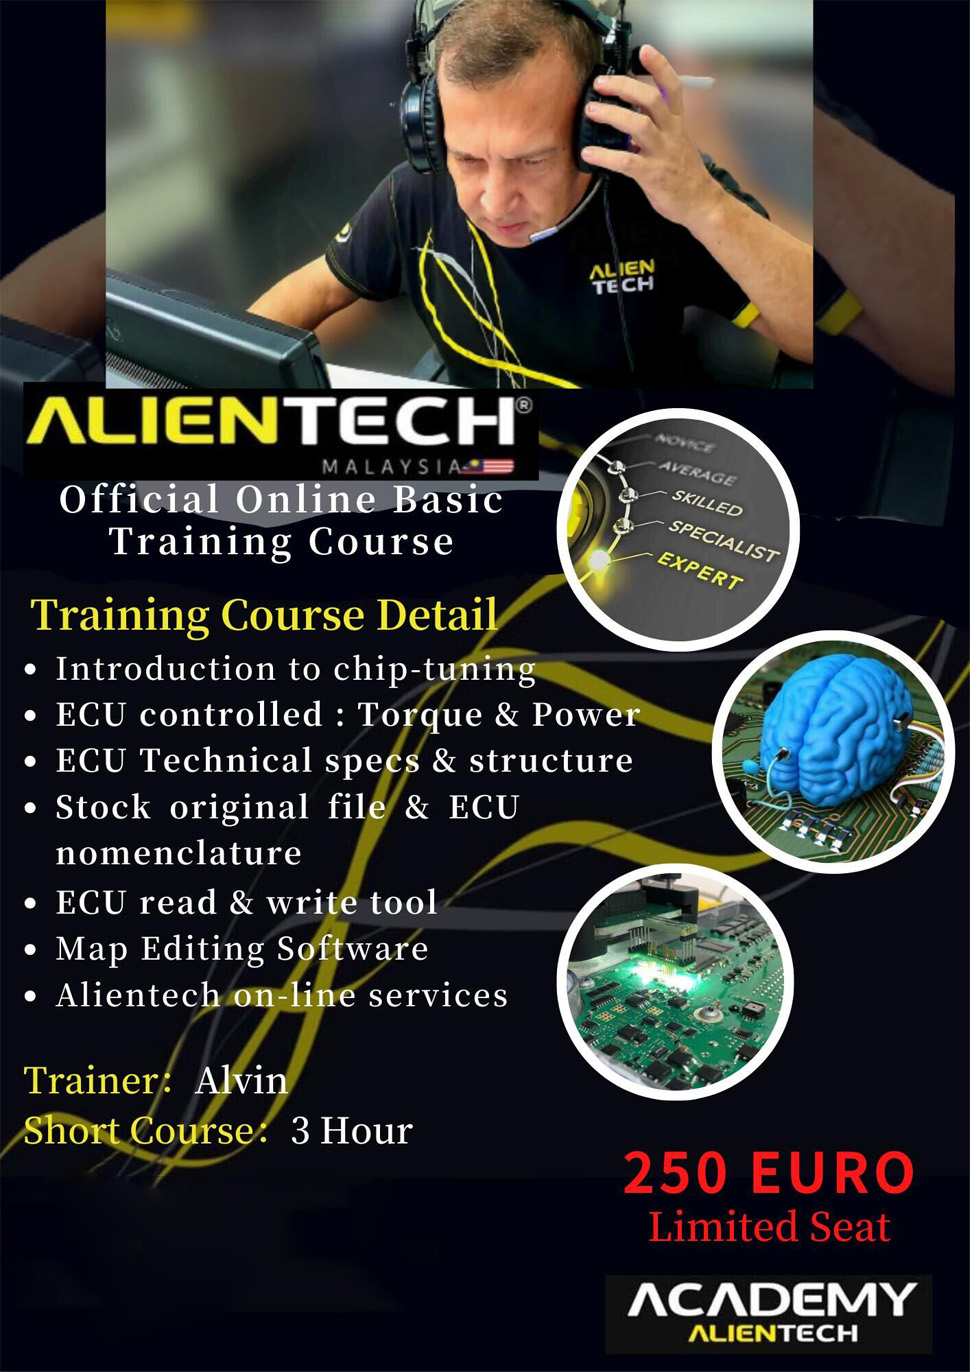 Official Online Basic Training Course Alientech Academy